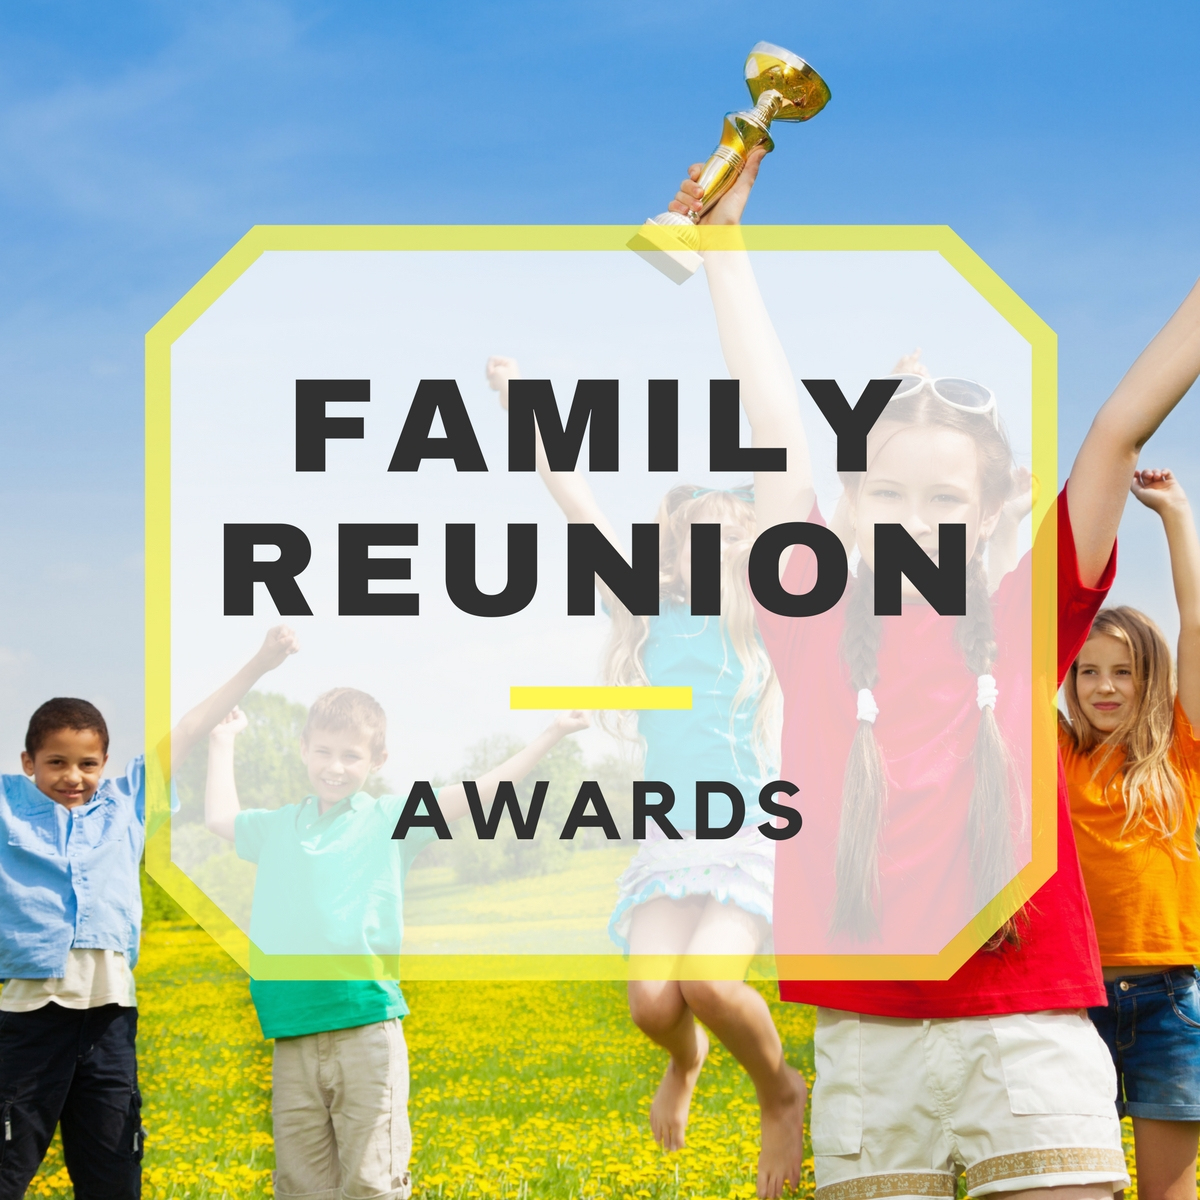 Family Reunion Awards - Free Printable Family Reunion Awards